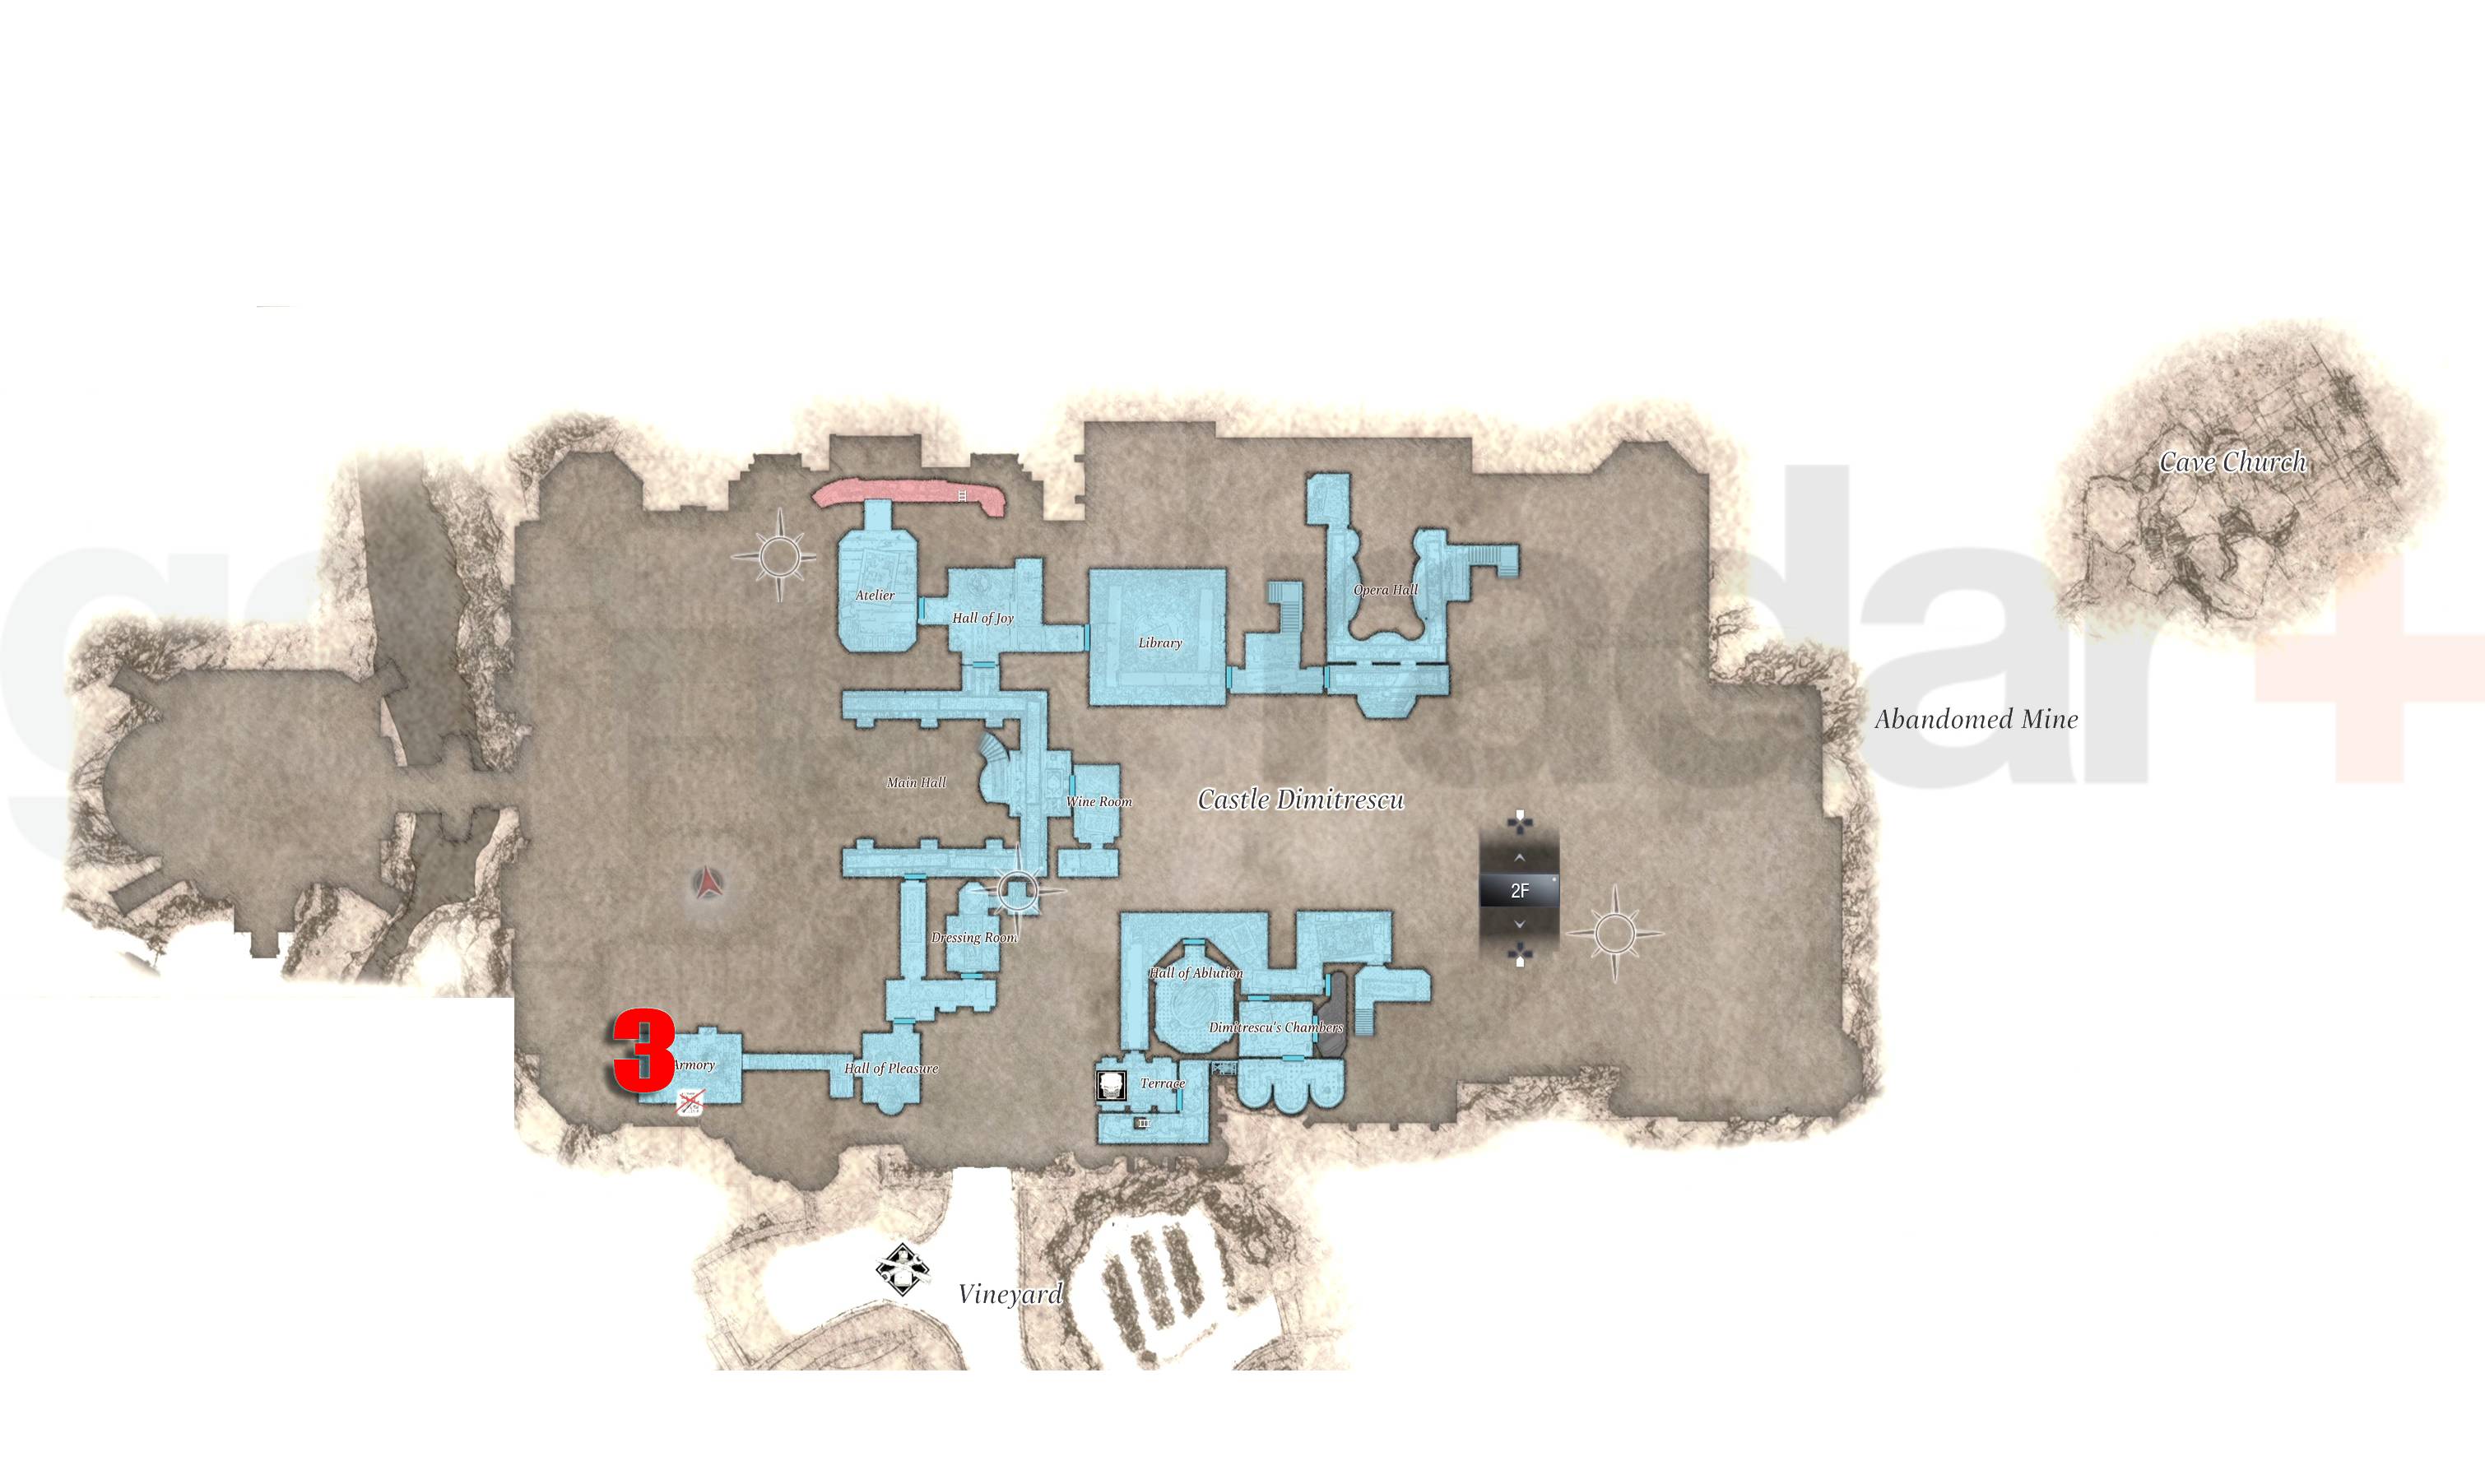 Resident evil 4 village map - bdaatom